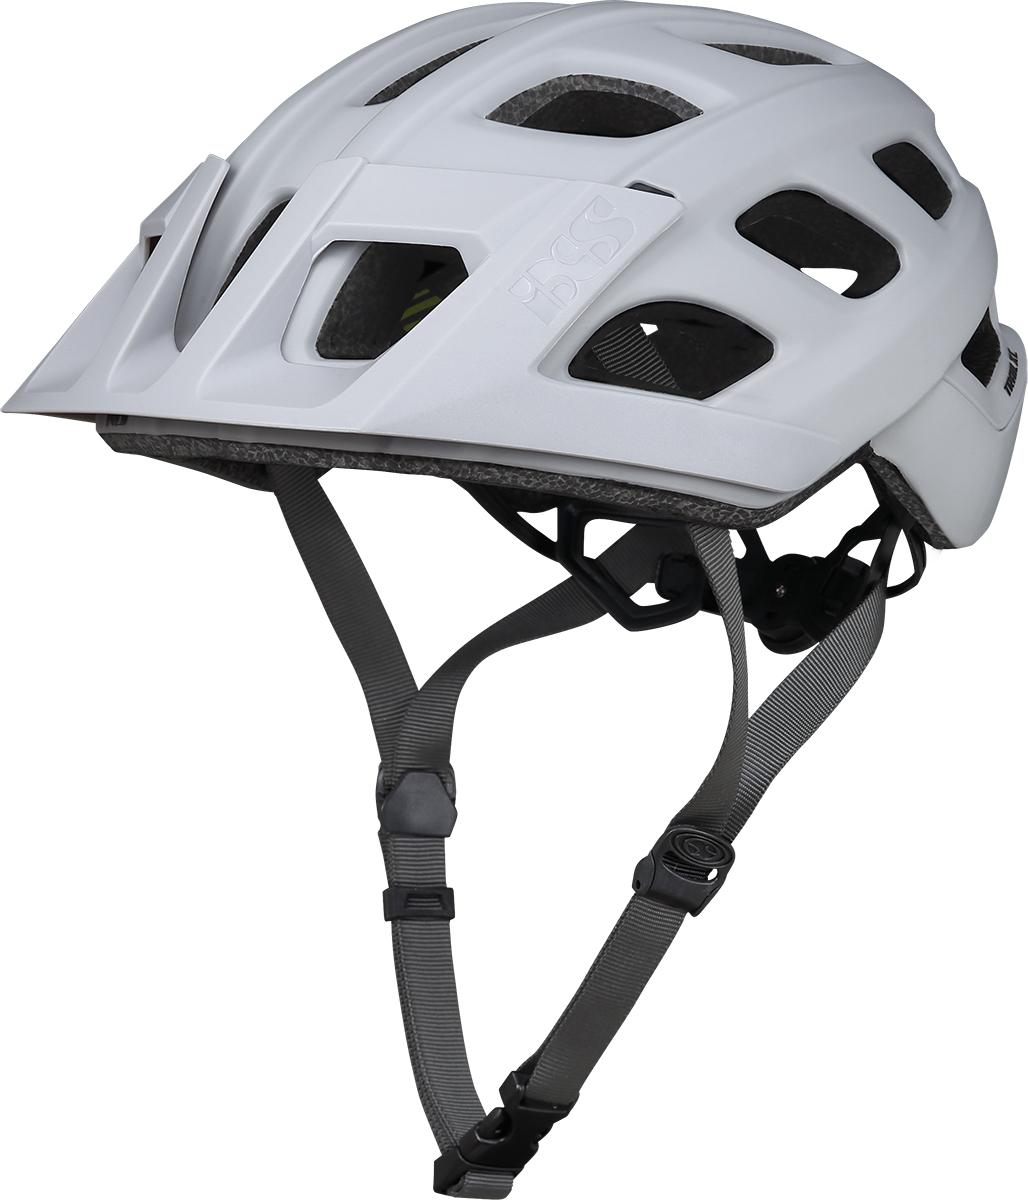 Ixs Trail Xc Helmet - Grey